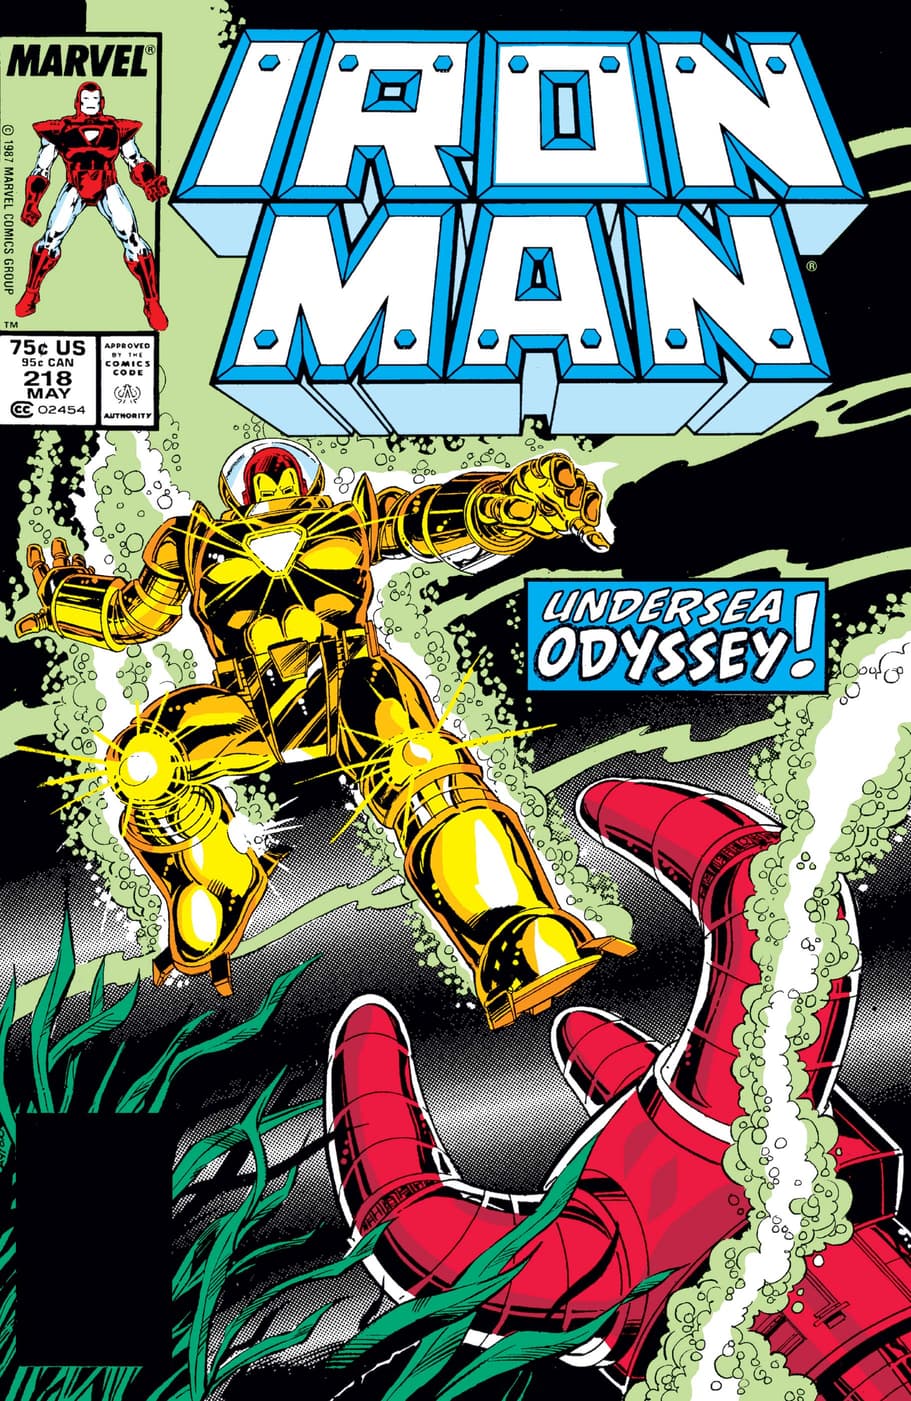 Iron Man #218